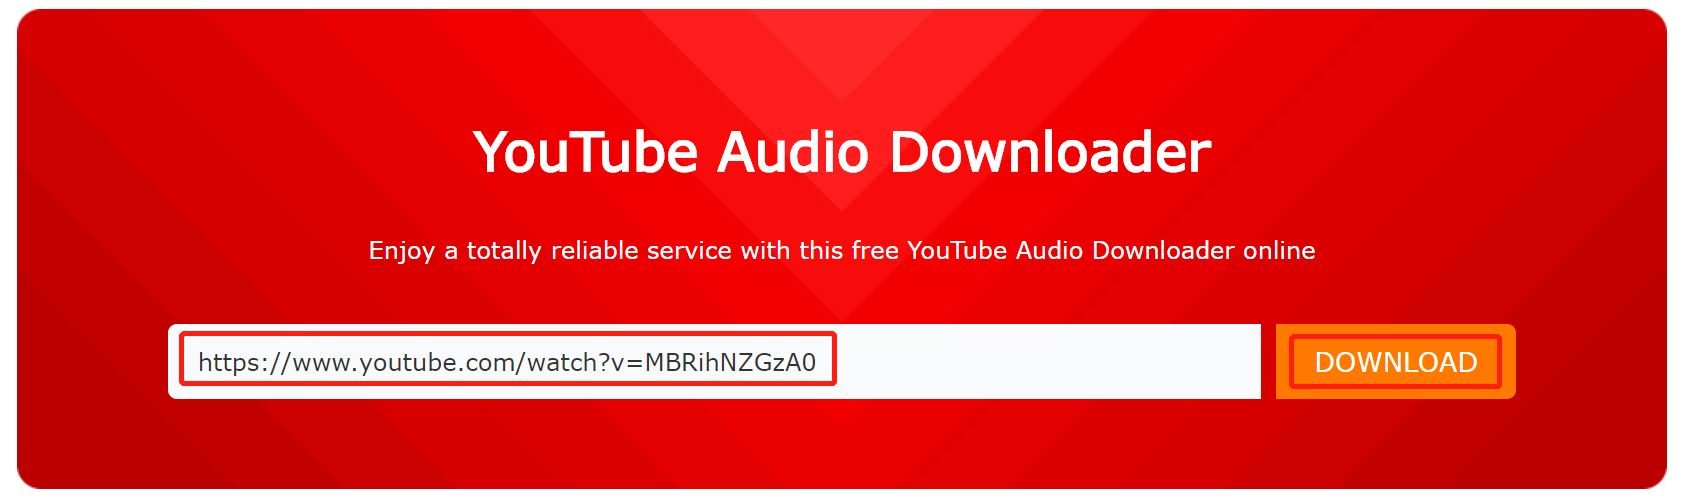 youtube-audio-downloader